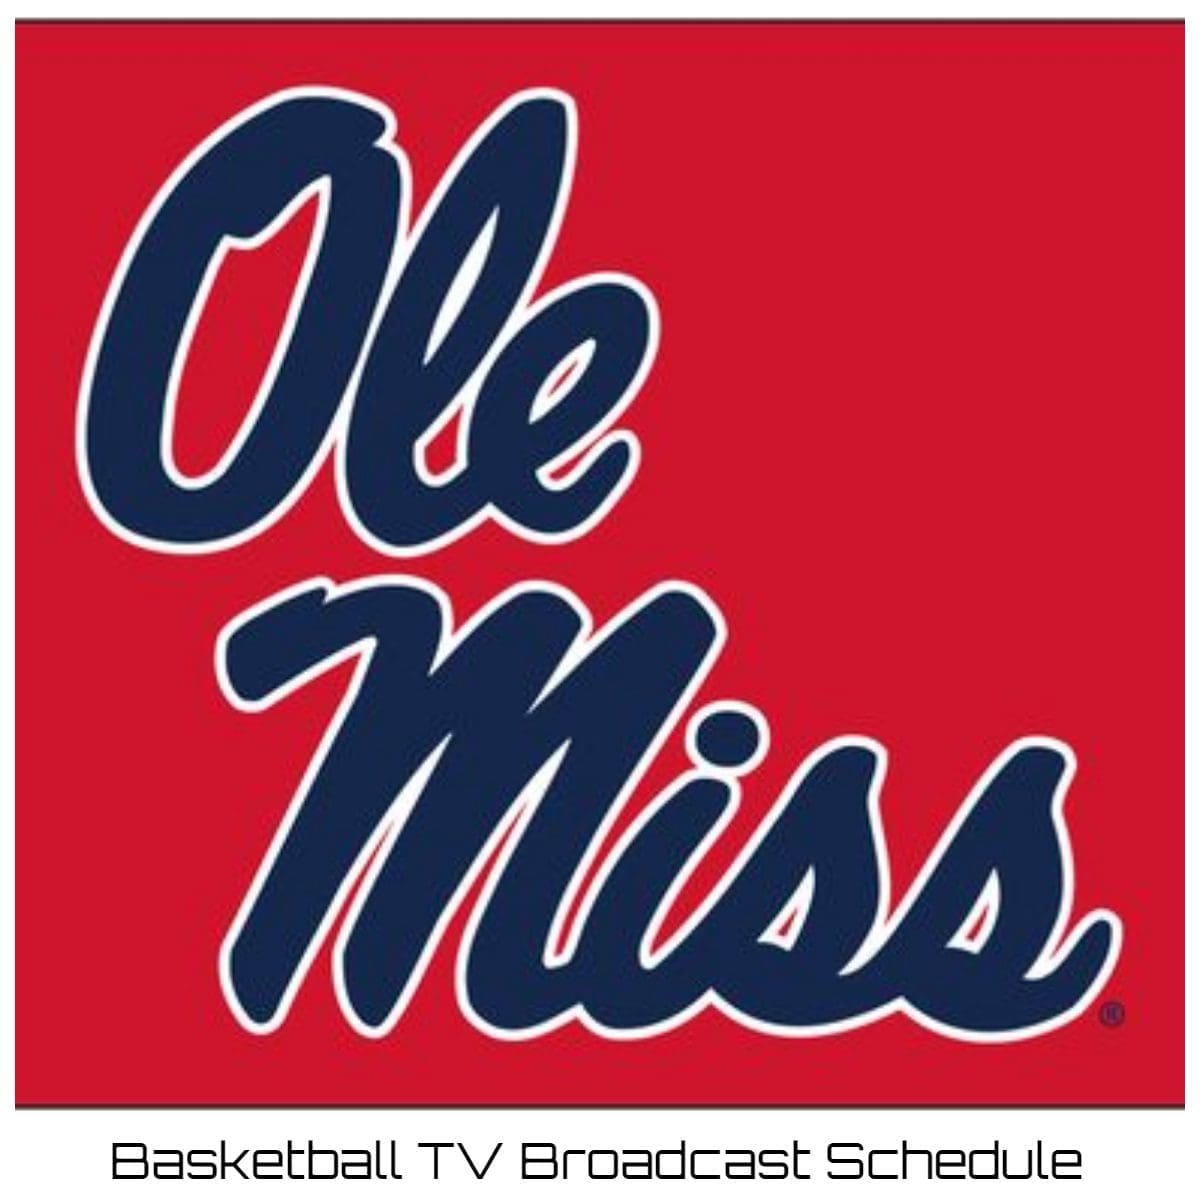 Ole Miss Rebels Basketball TV Broadcast Schedule 202223 Printable PDF